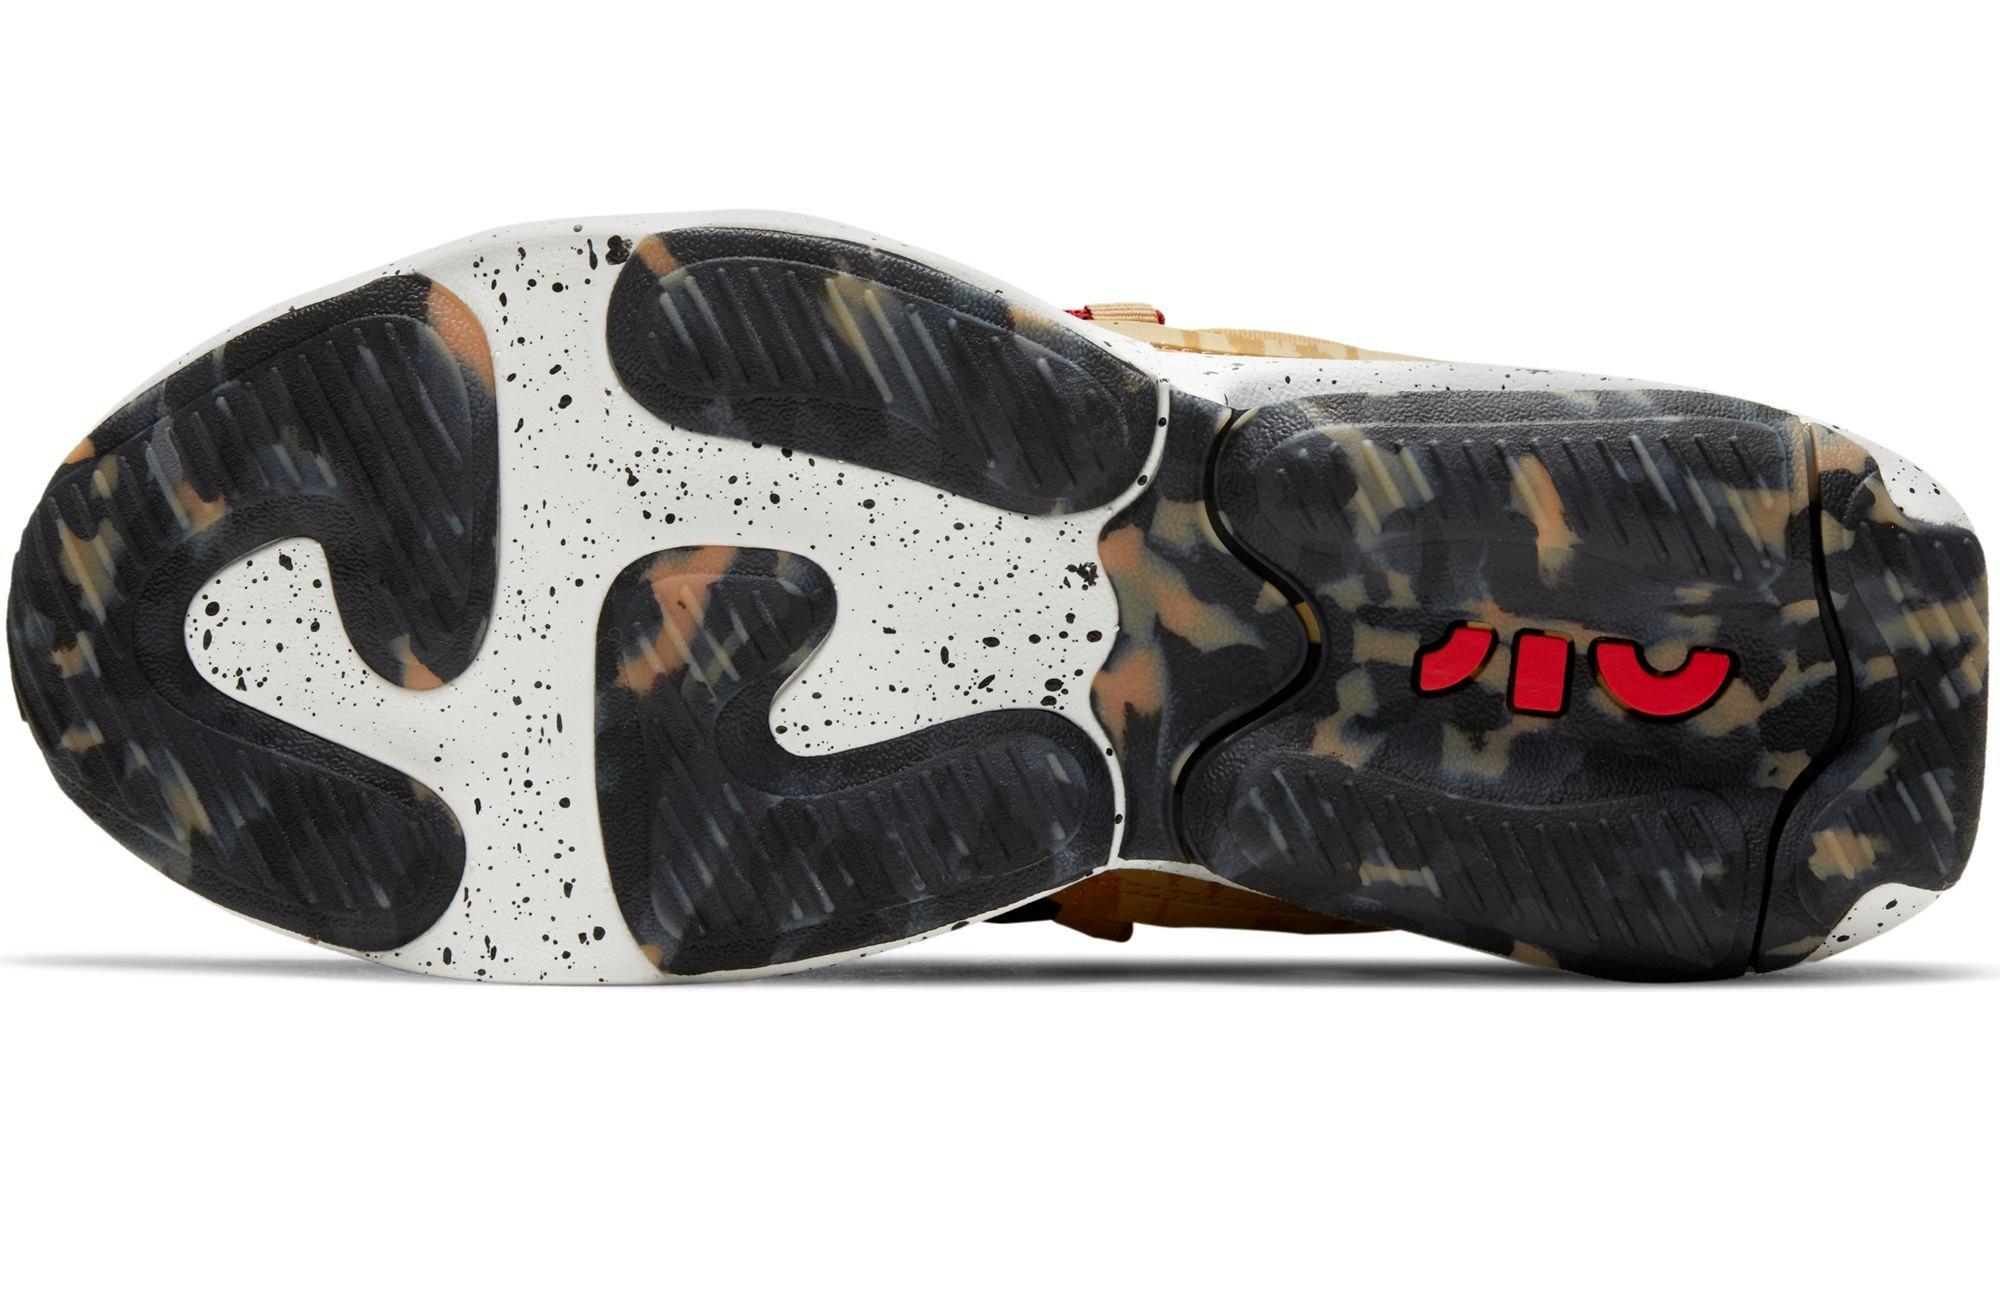 Sneaker Release: Nike Air Barrage Mid “Black/White/Cabana”